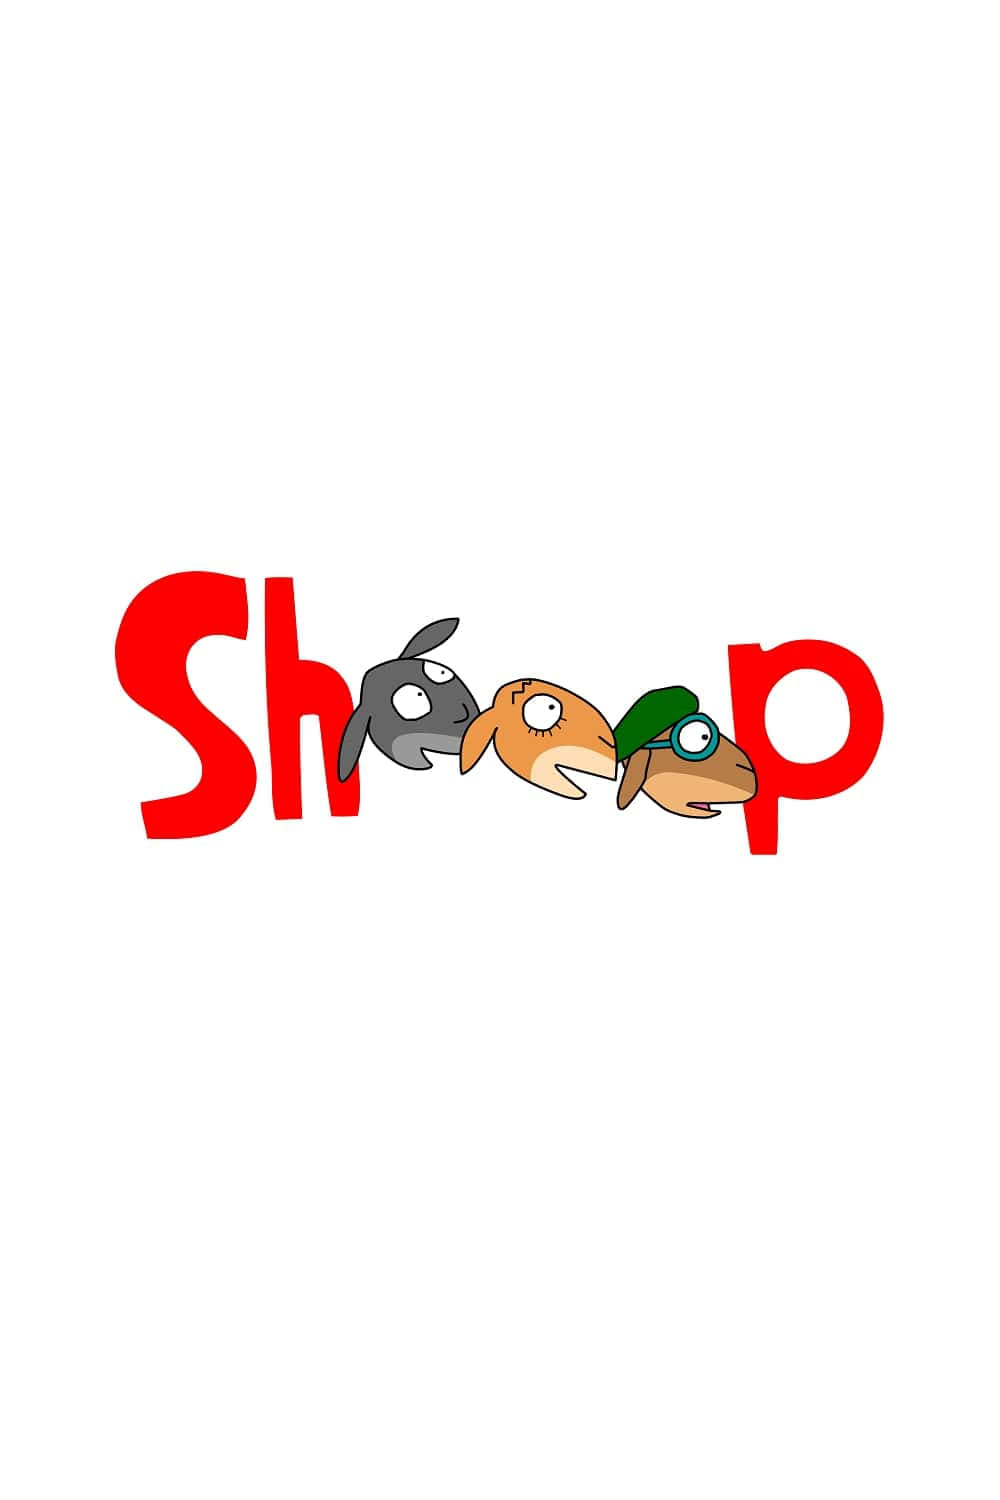 Sheeep